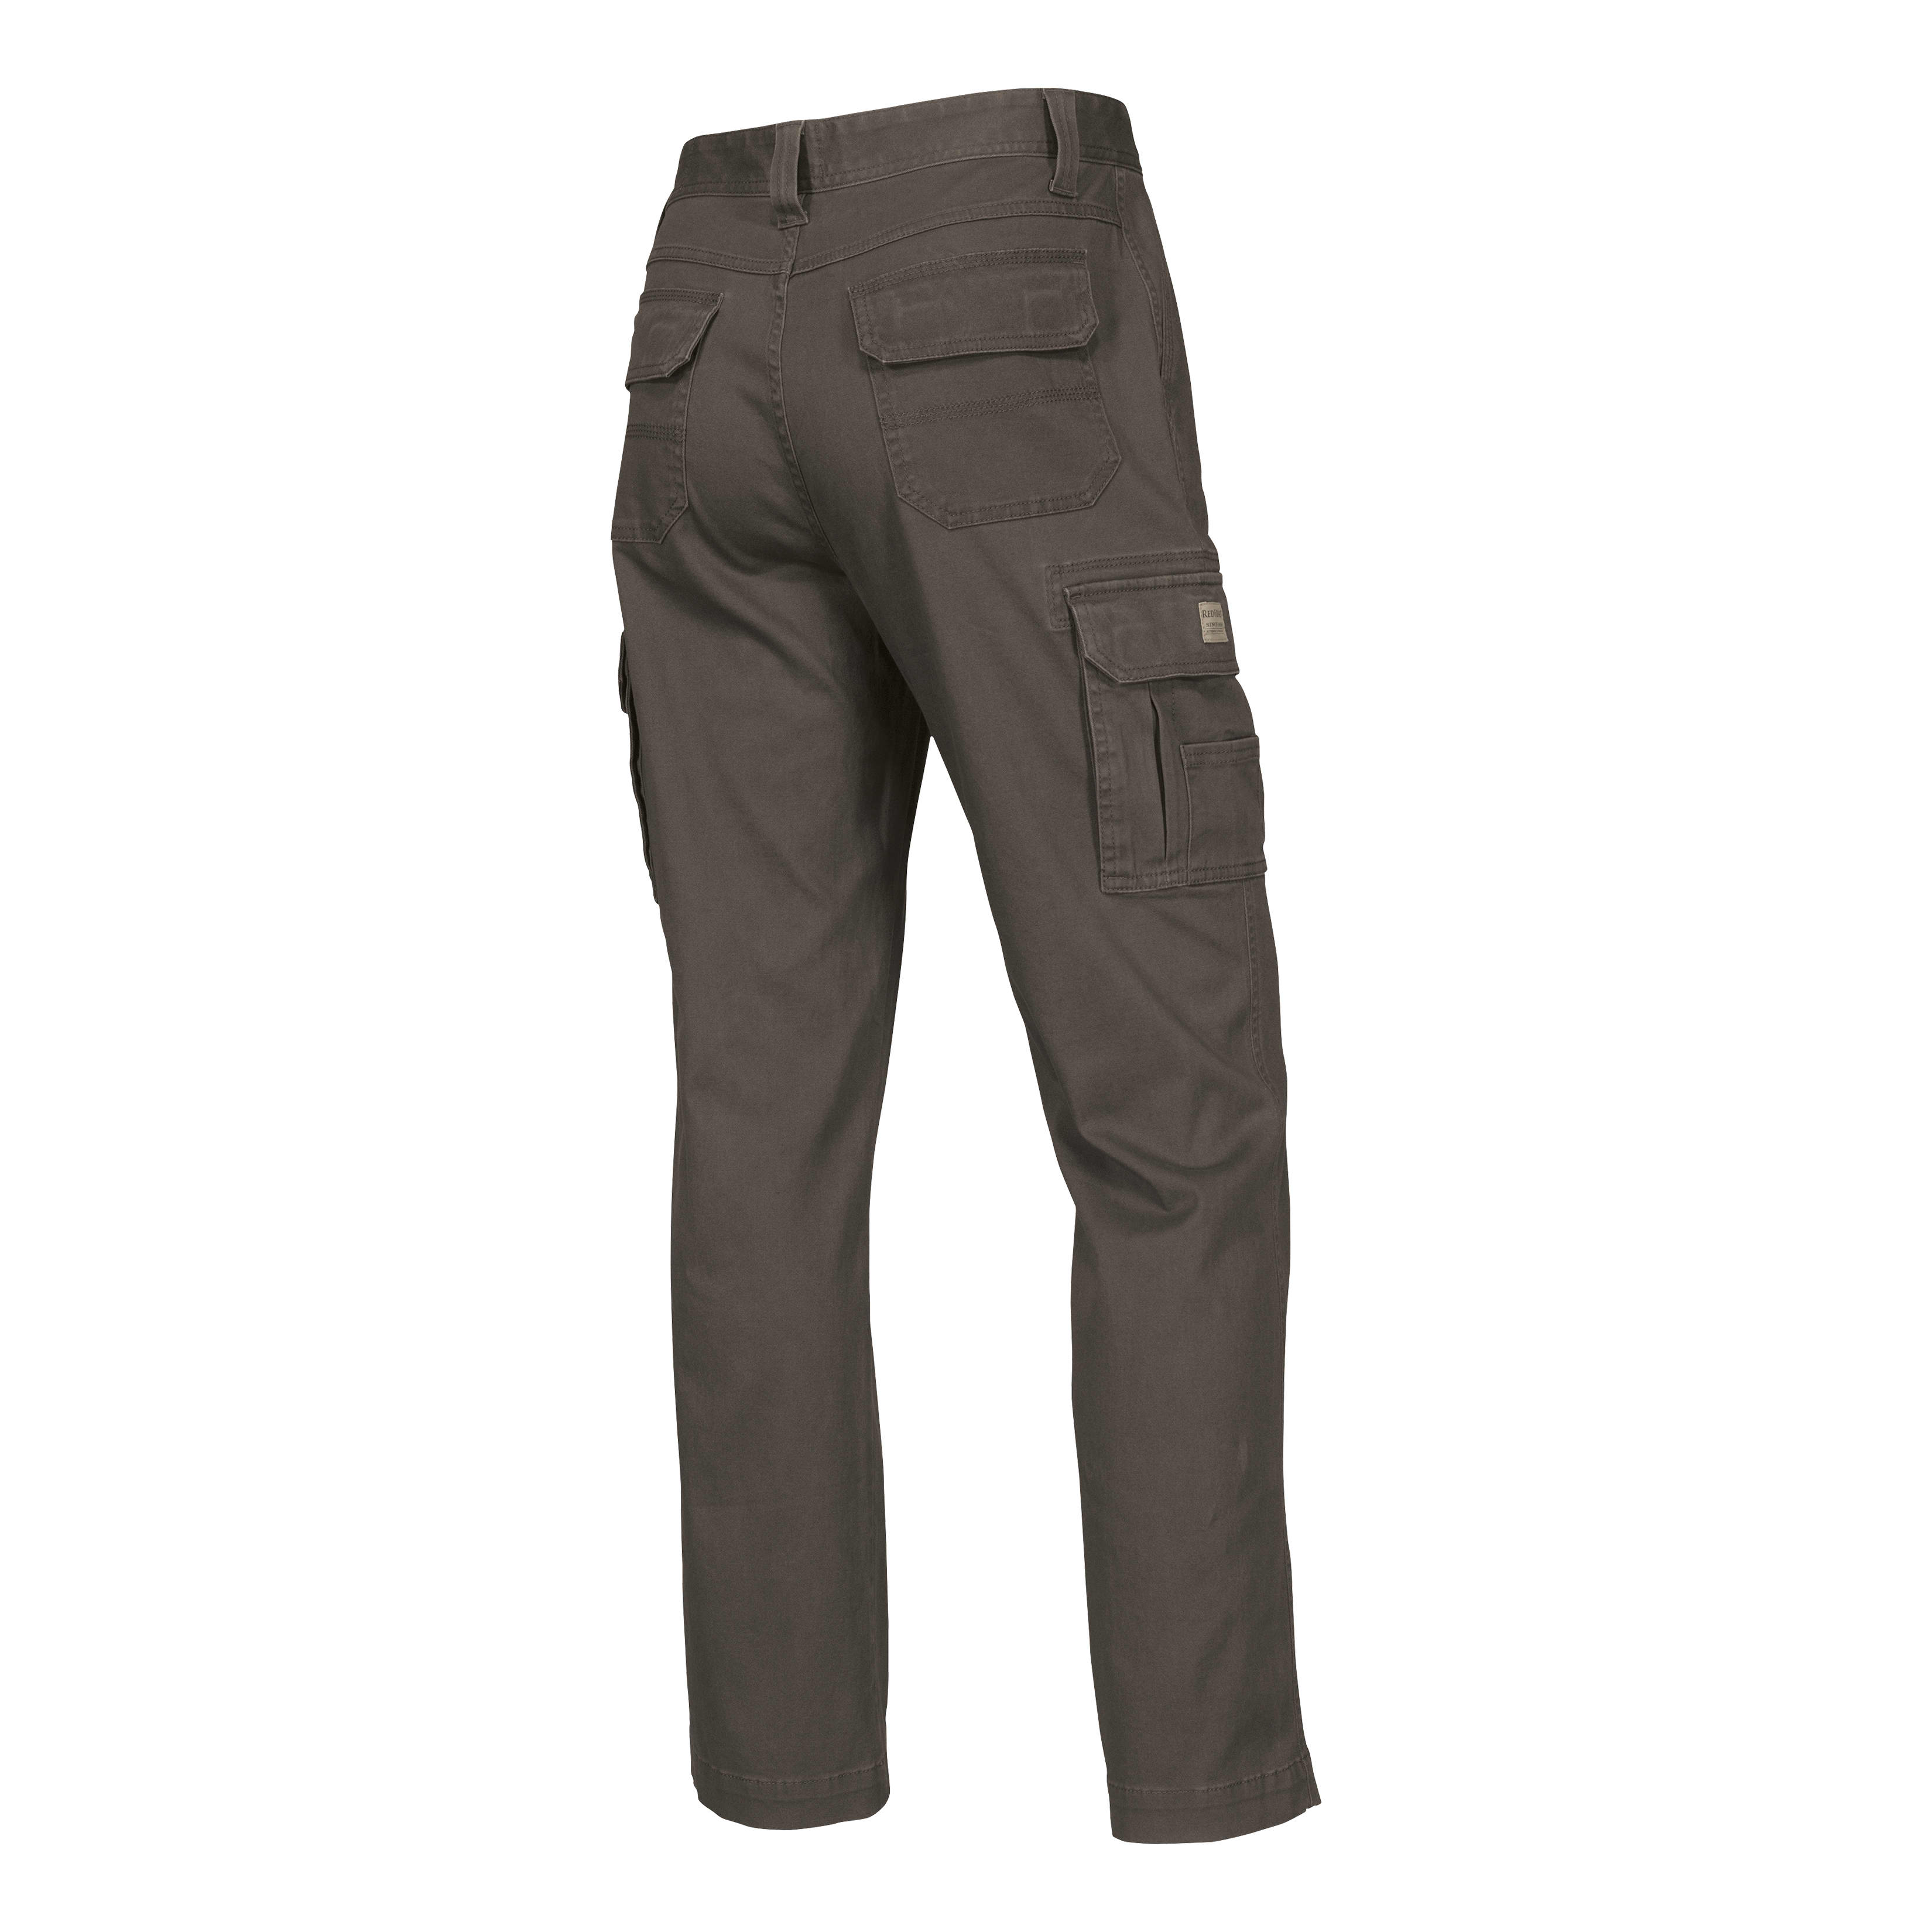 CABI Fall 2021 - Rust Explorer Cargo Pants - Style# 4138 - Size 6